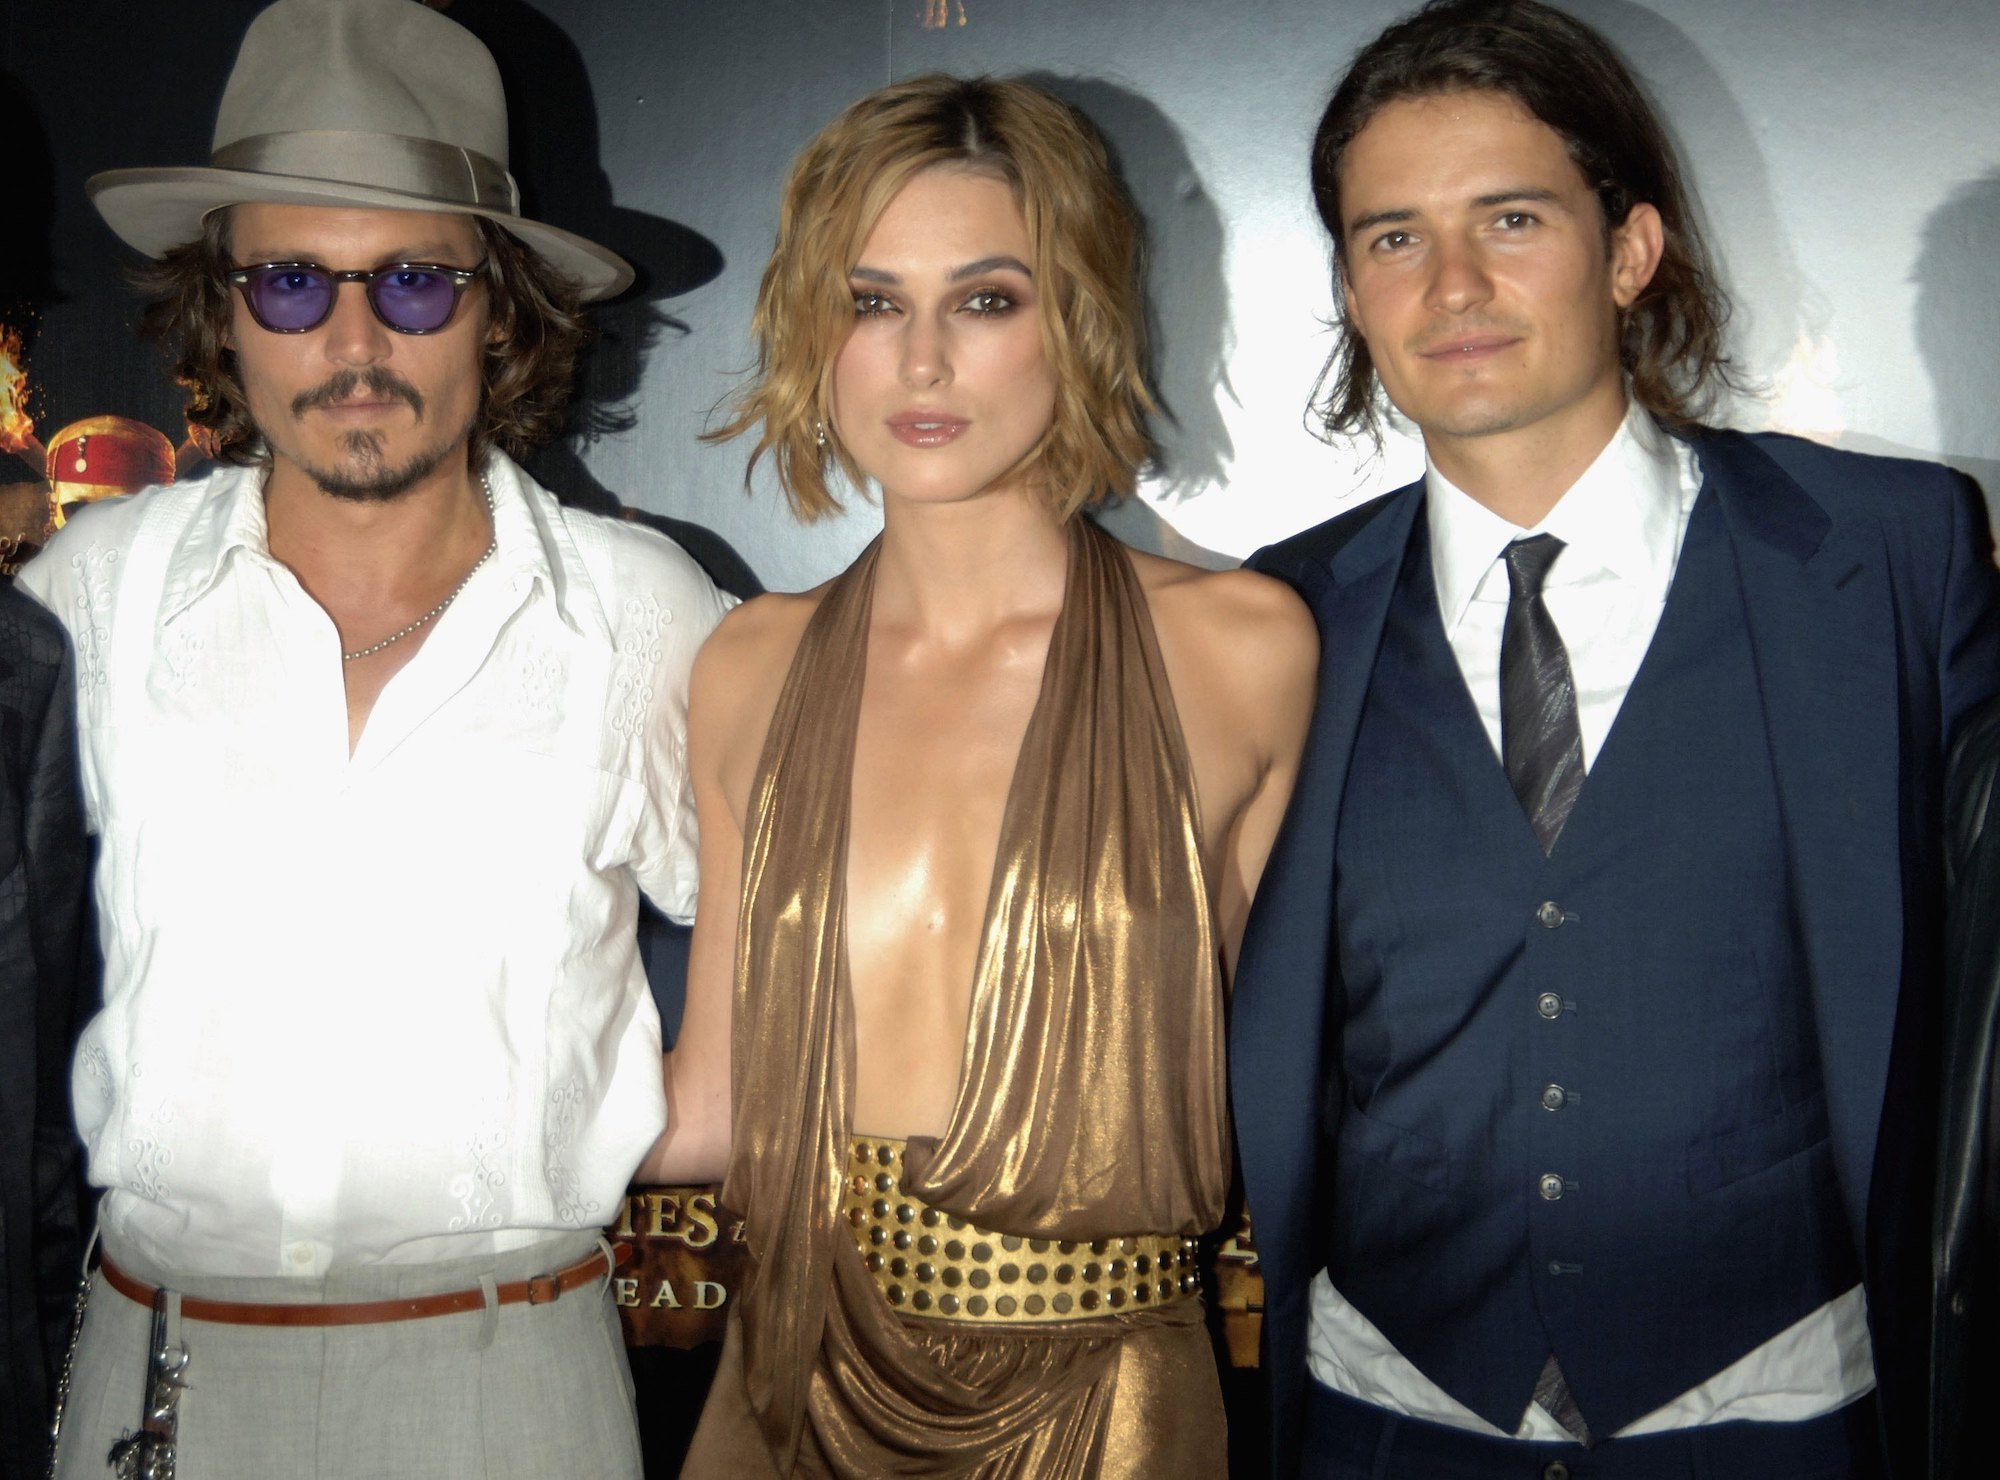 Johnny Depp, Keira Knightley, and Orlando Bloom smiling at the camera